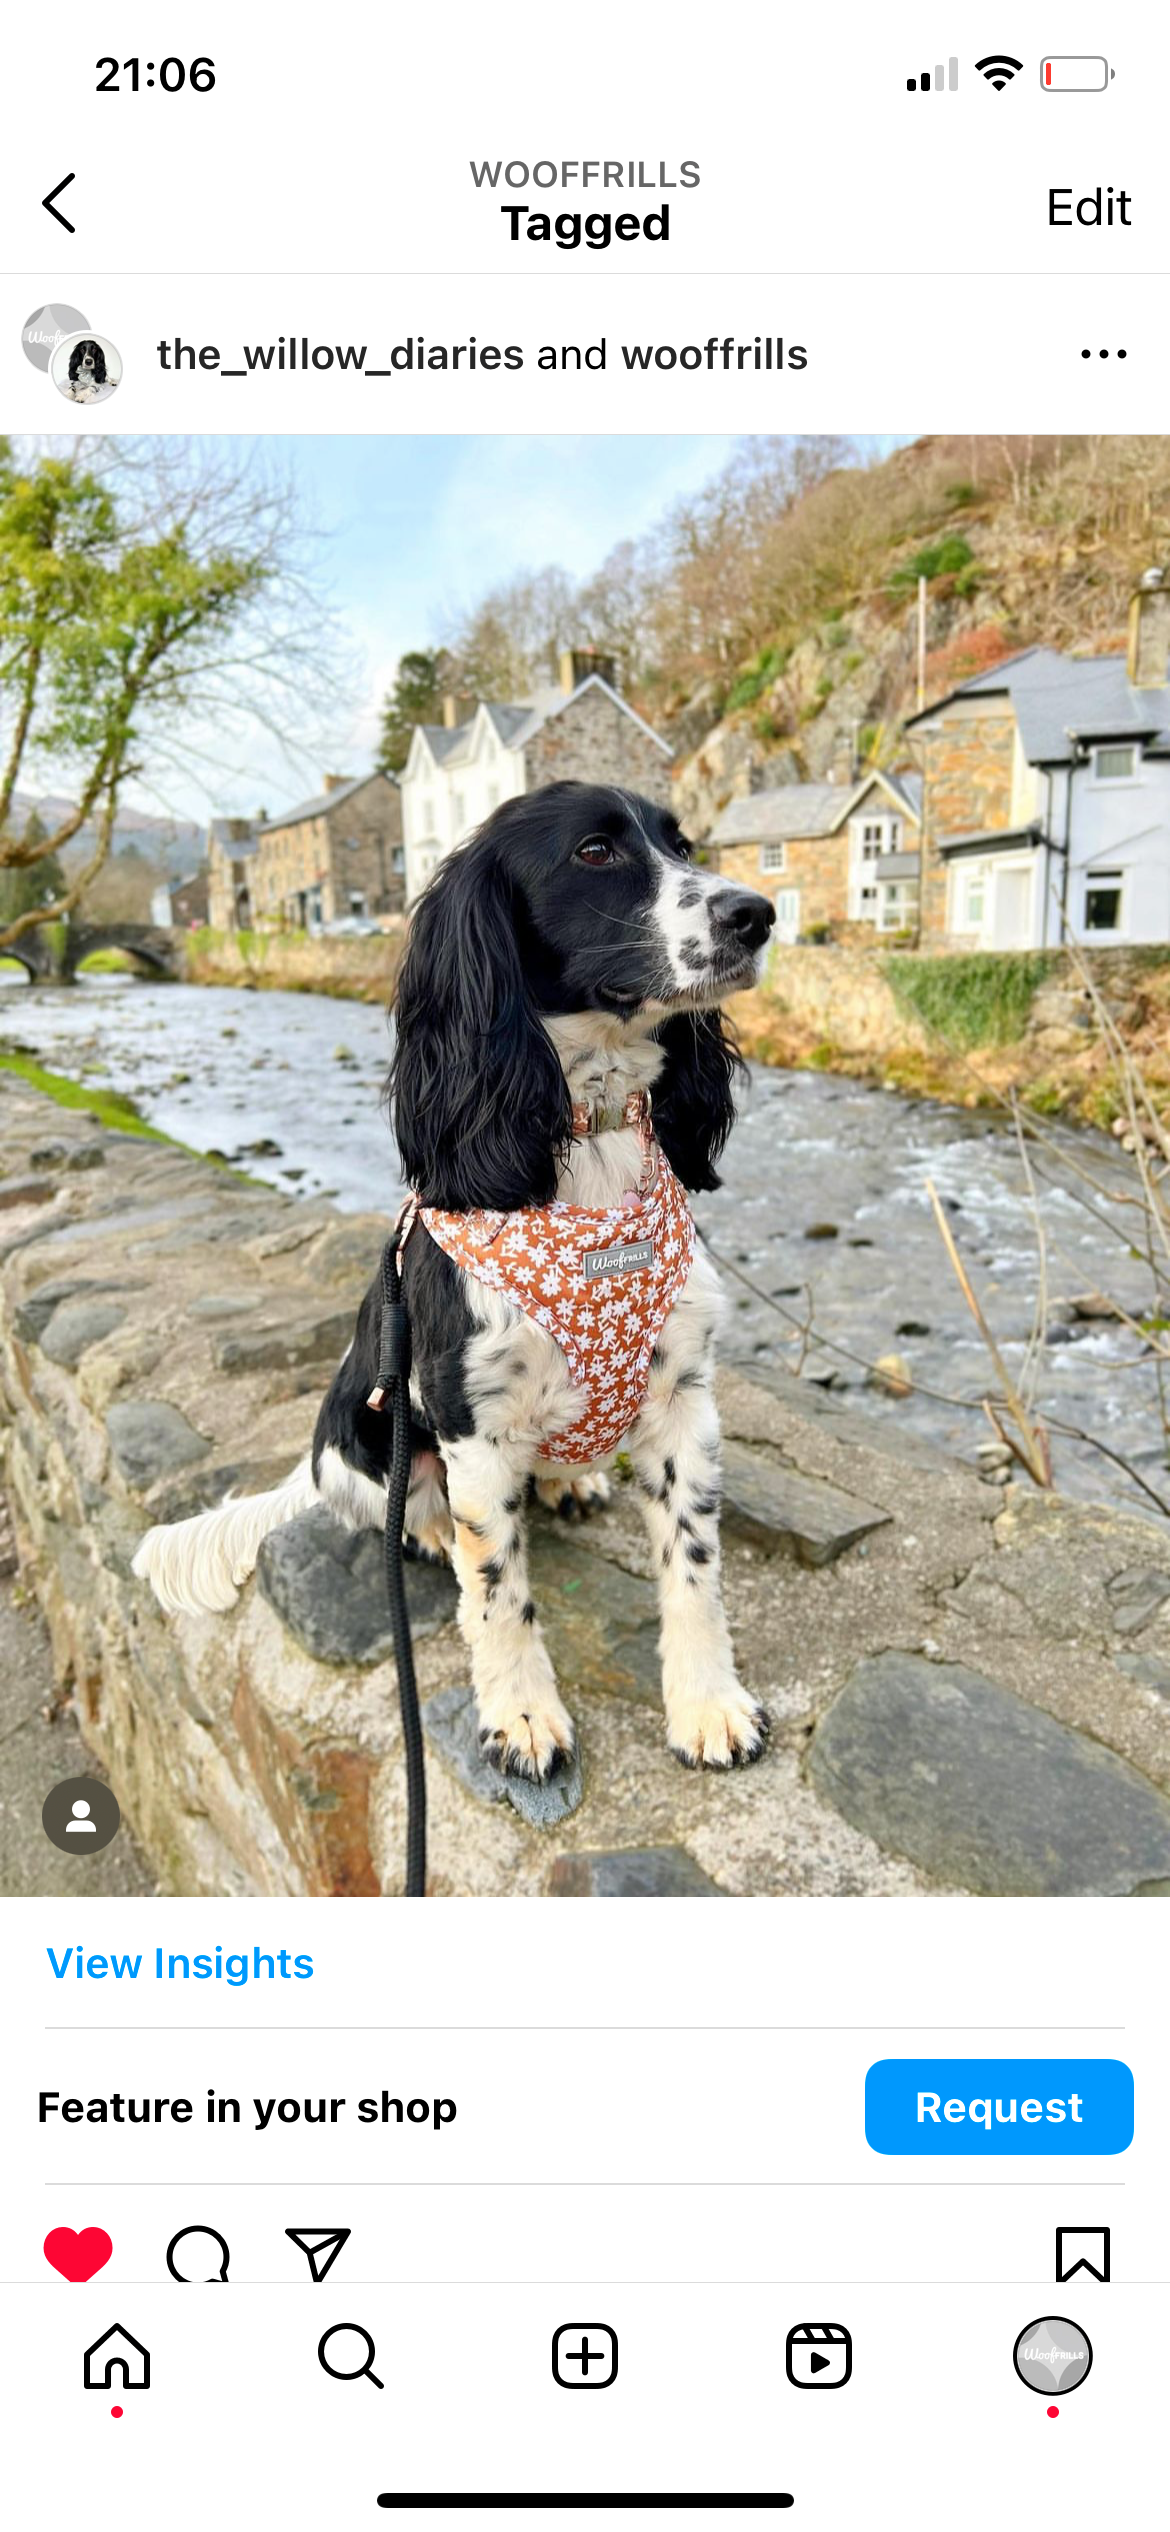 Cocker spaniel wearing a daisy dog harness